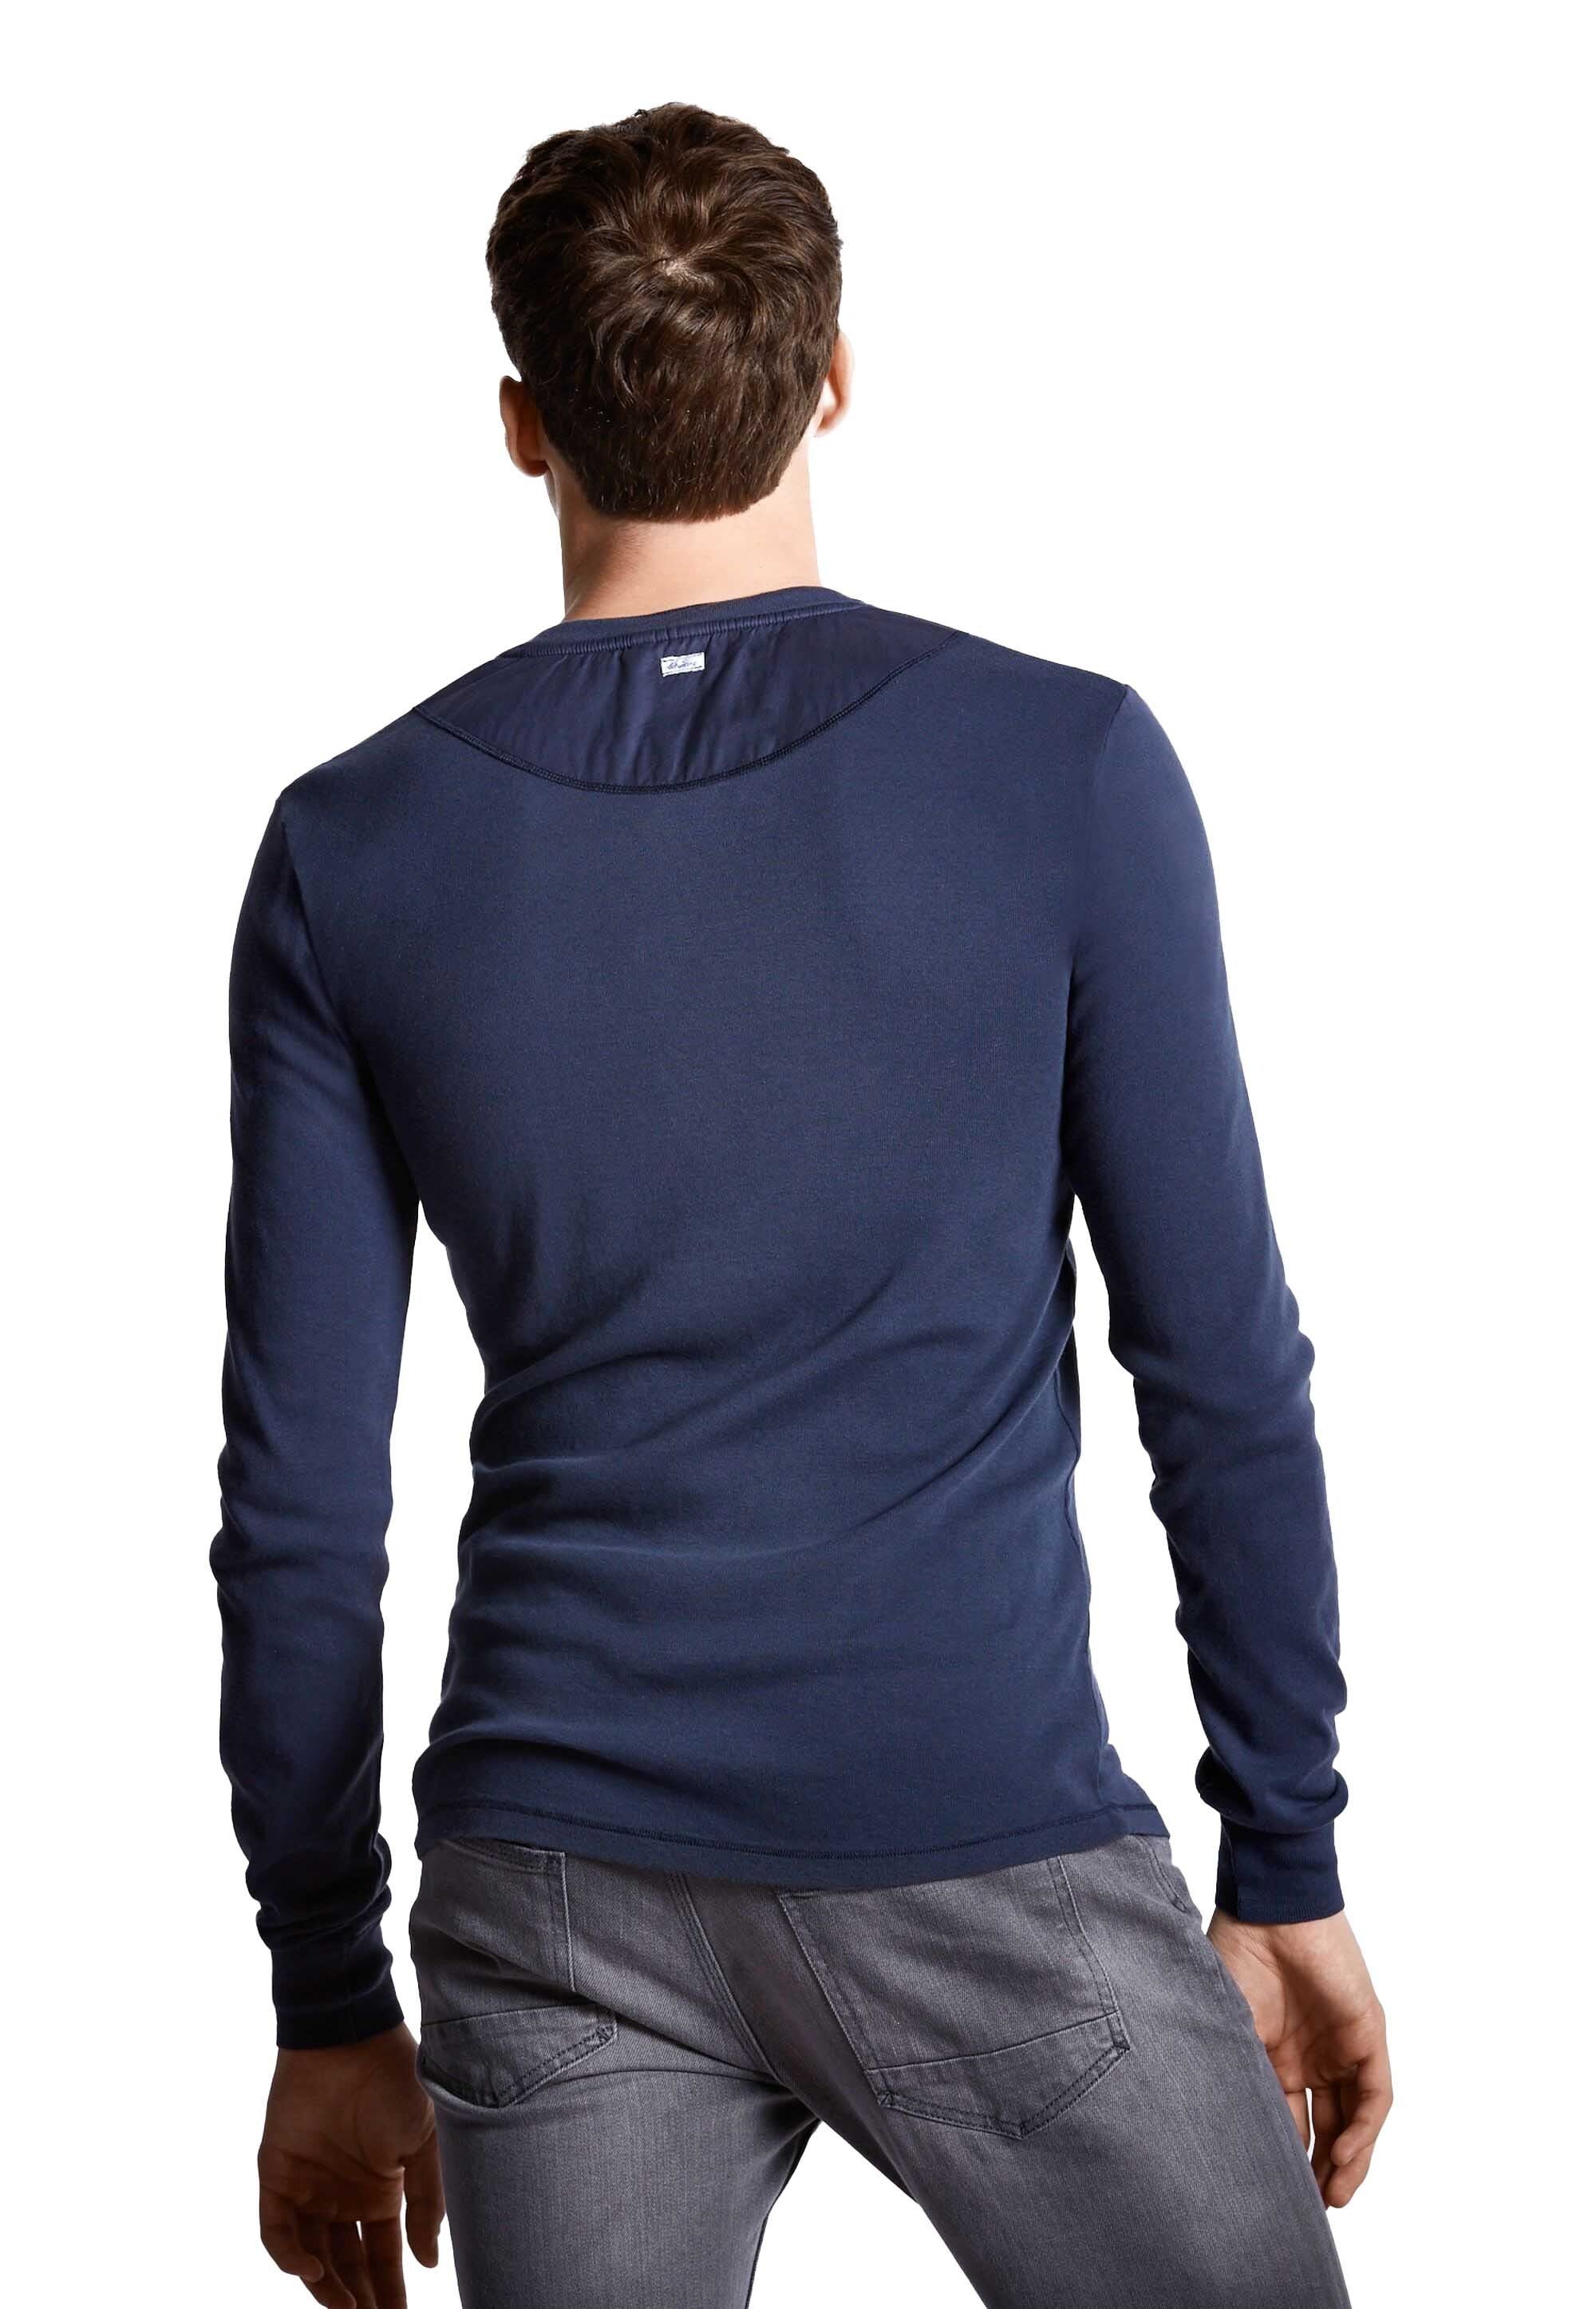 Langarm, Karl Heinz REVIVAL T-Shirt Herren - SCHIESSER Shirt Blau Unterhemd,